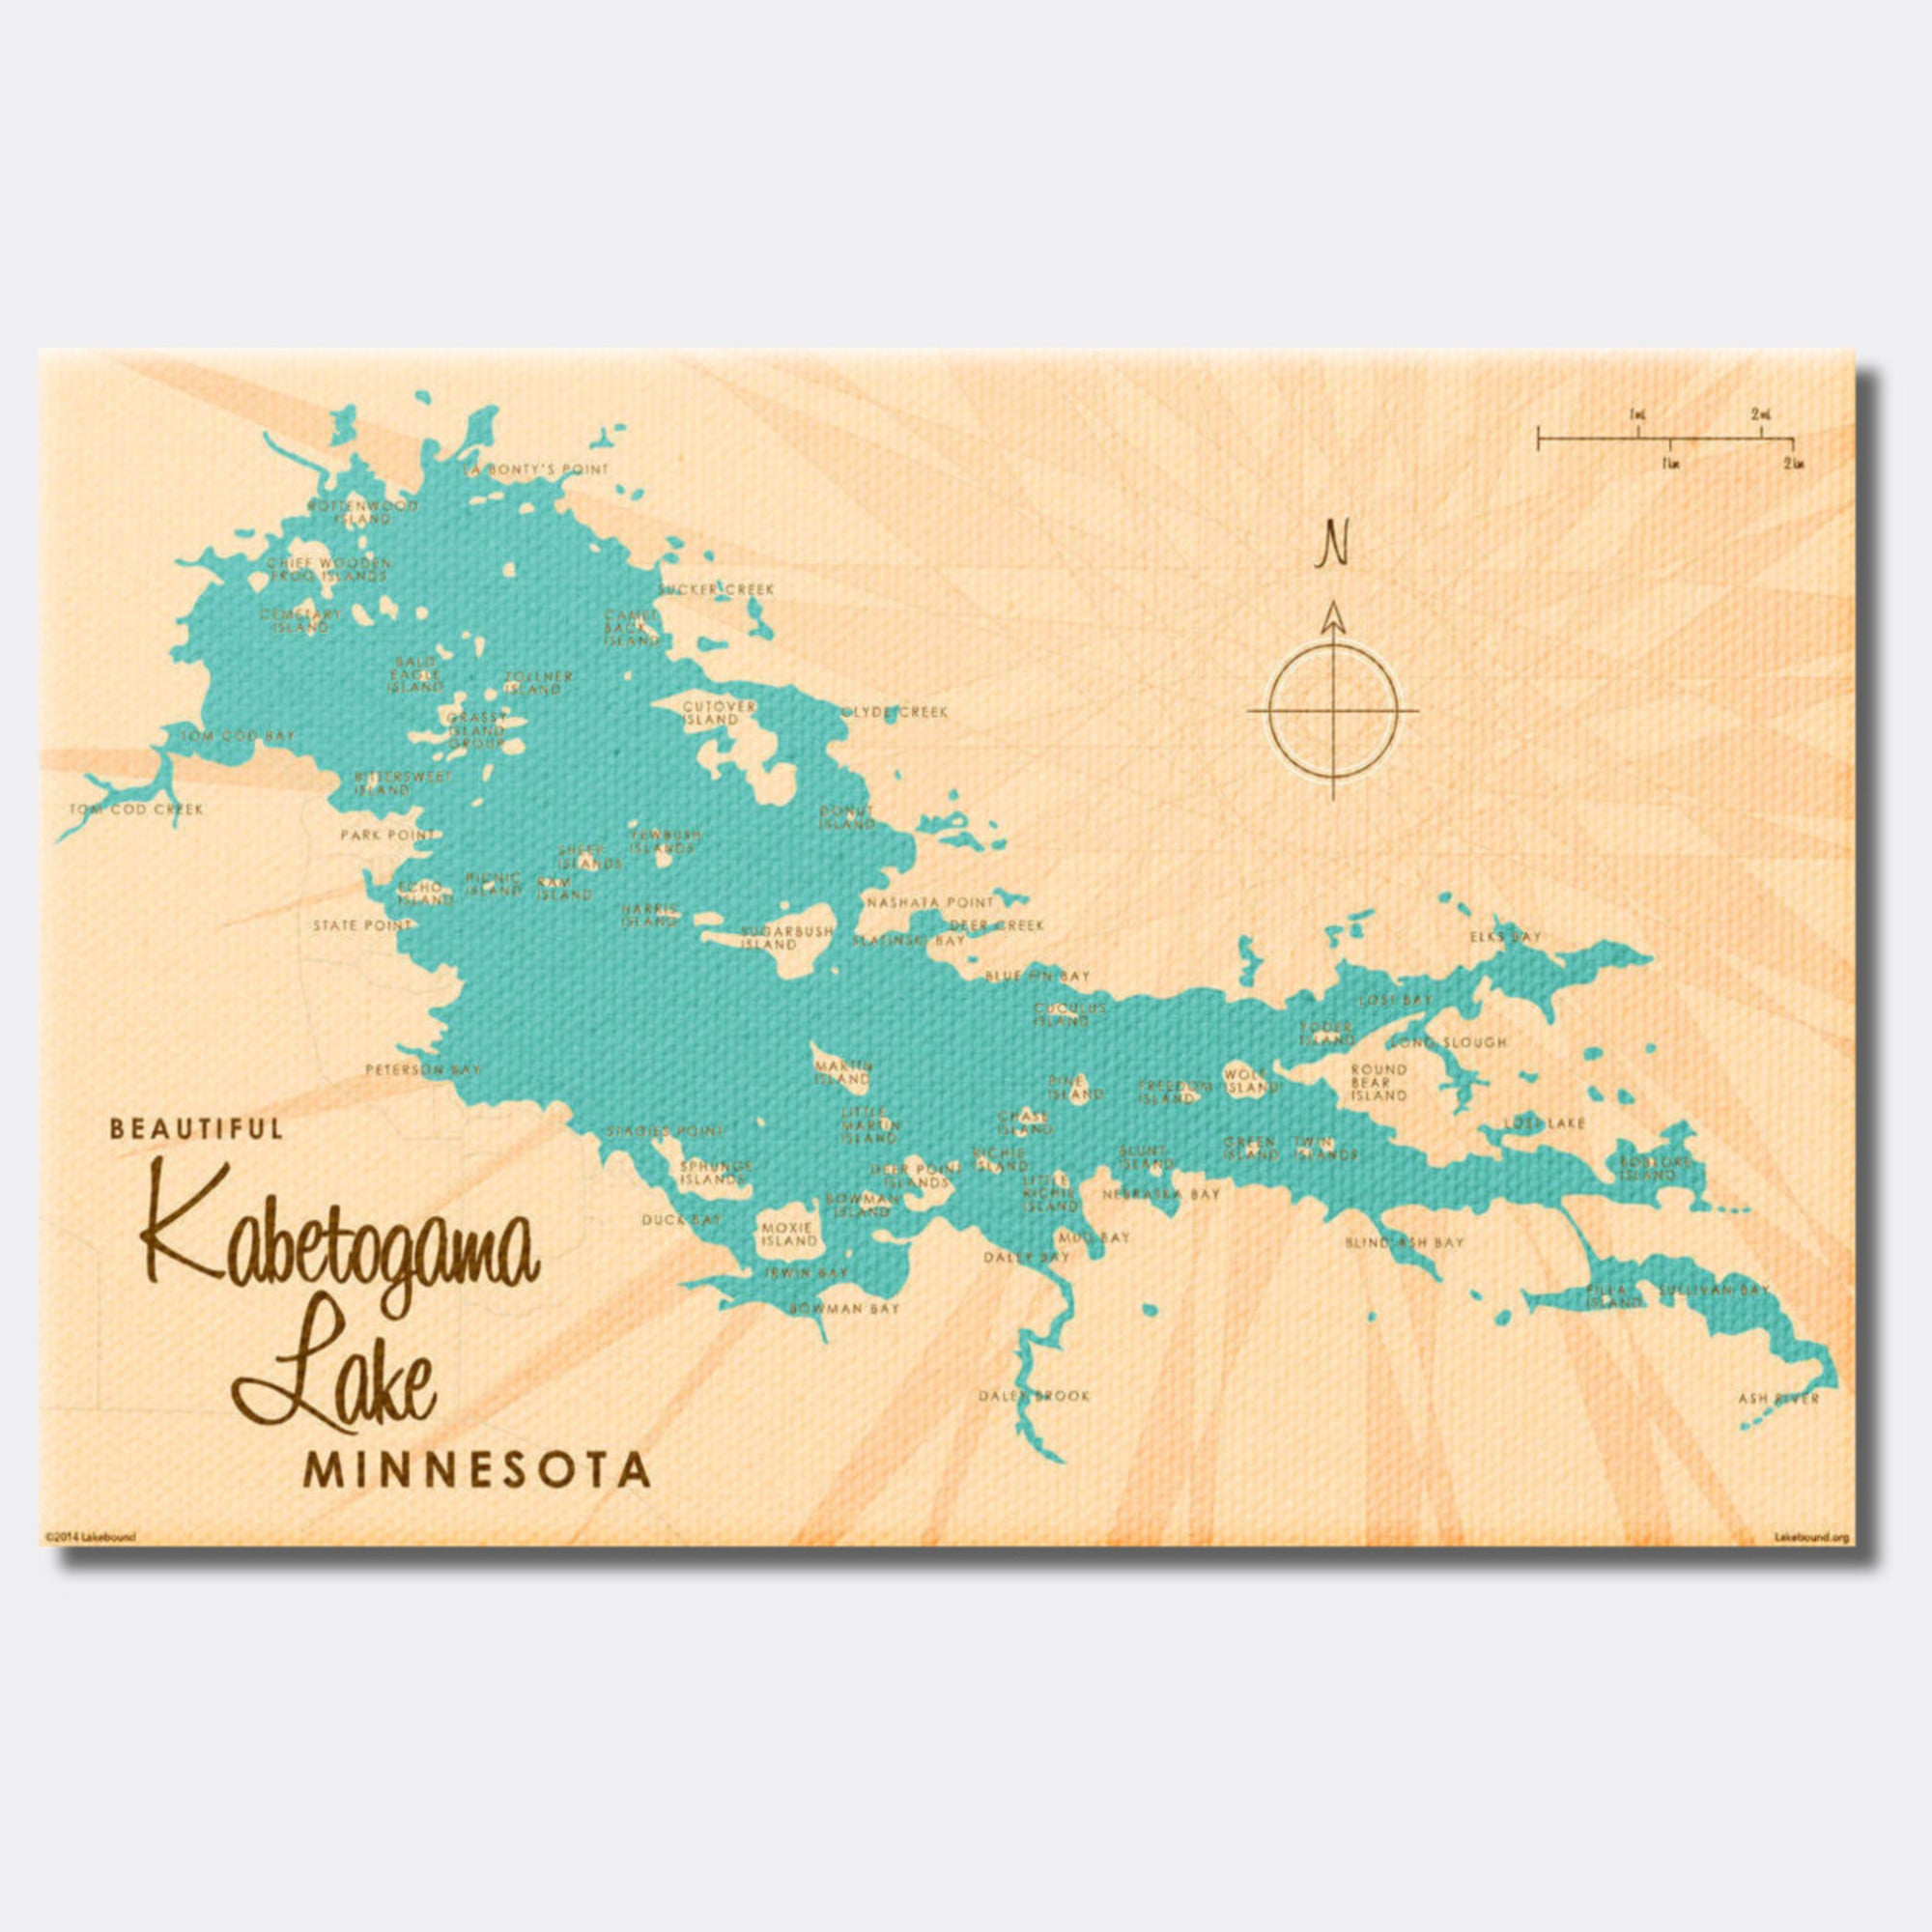 Kabetogama Lake Minnesota, Canvas Print